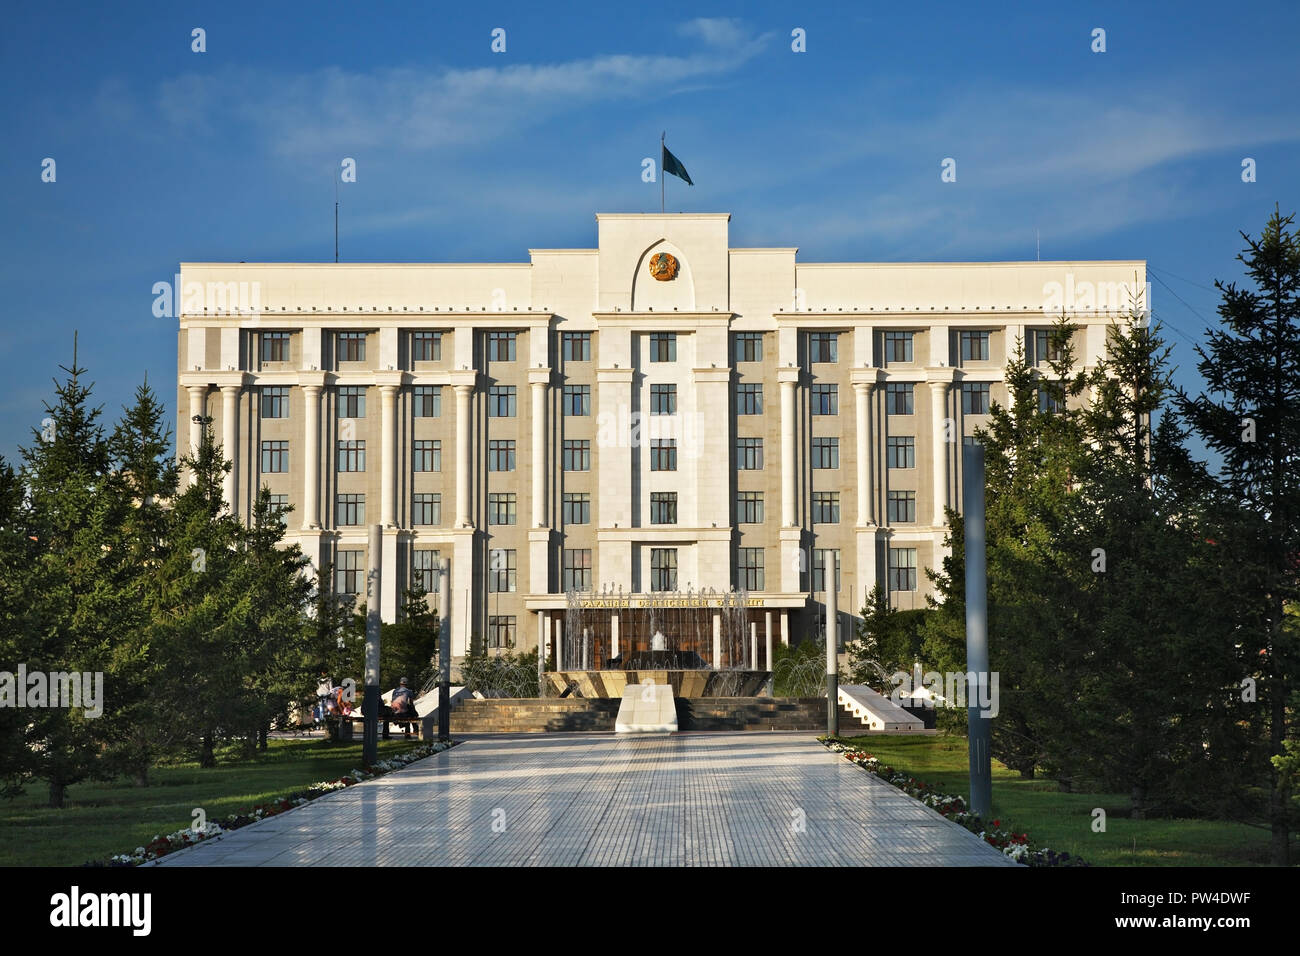 Akimat - City hall at Independence square in Karaganda. Kazakhstan Stock Photo